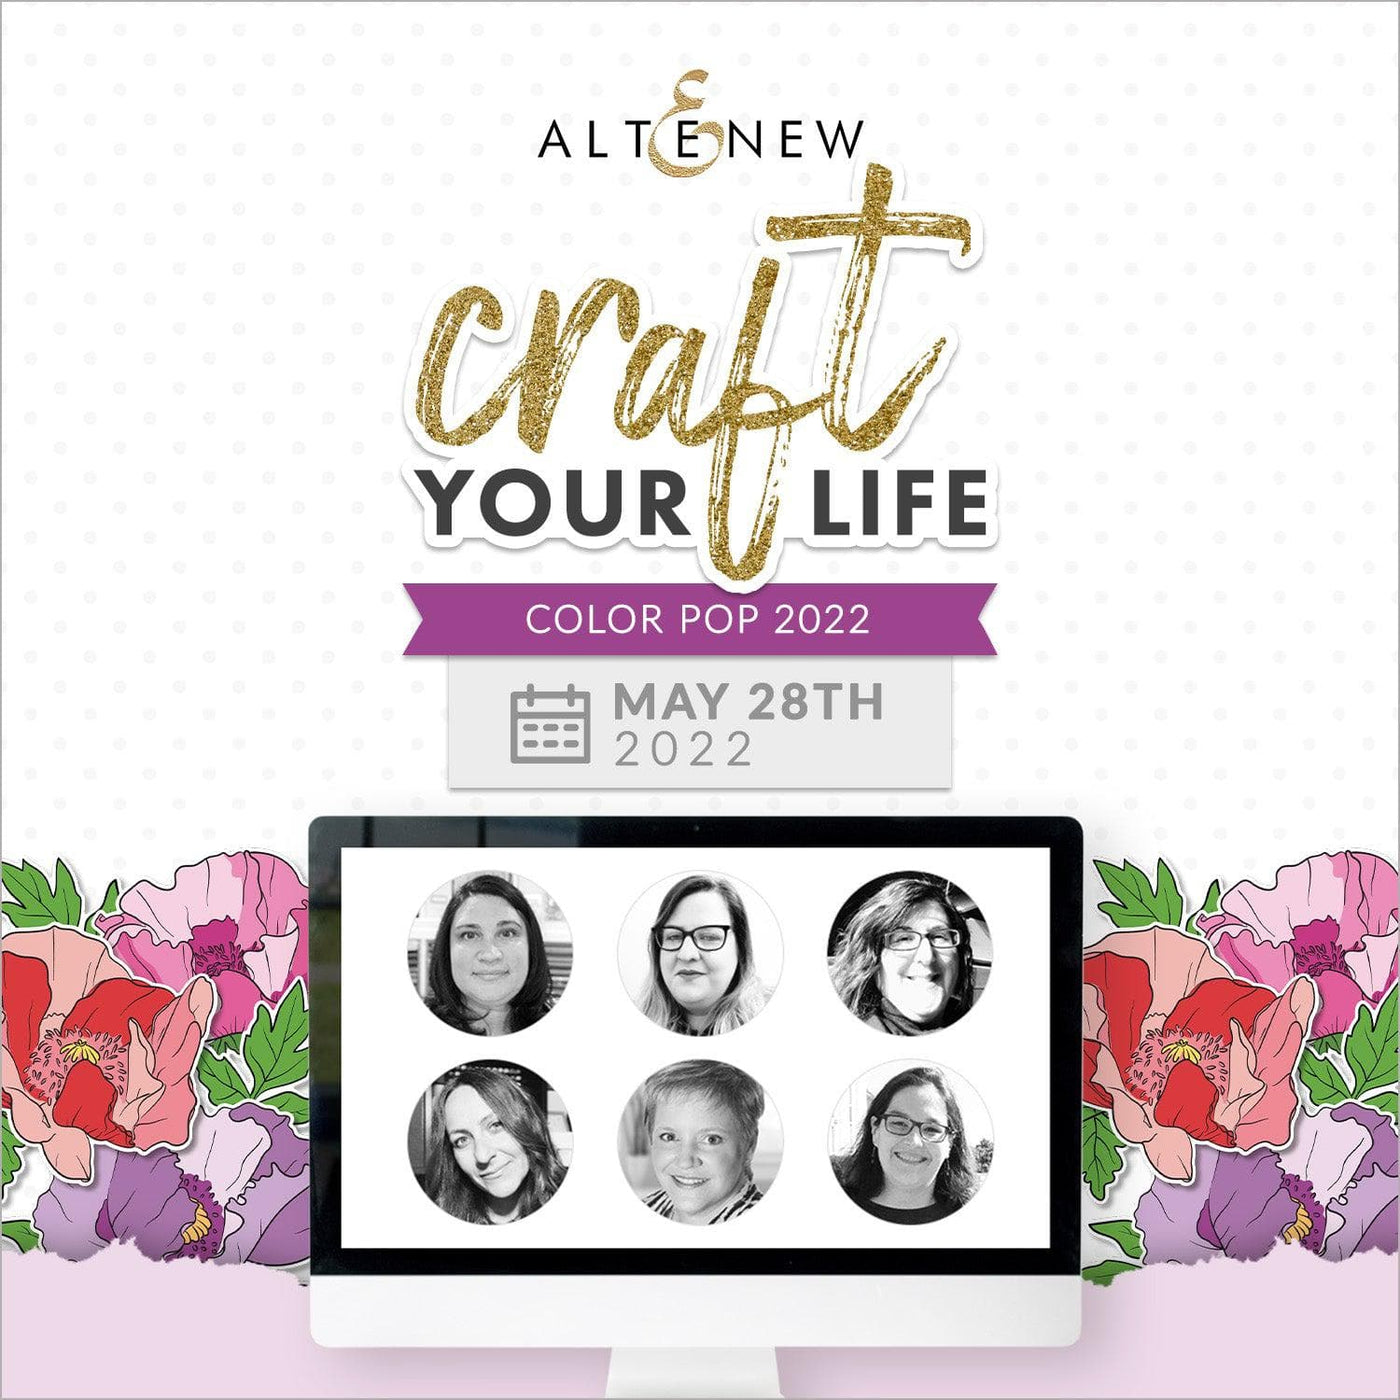 Altenew Workshop Craft Your Life Retreat - Color Pop 2022